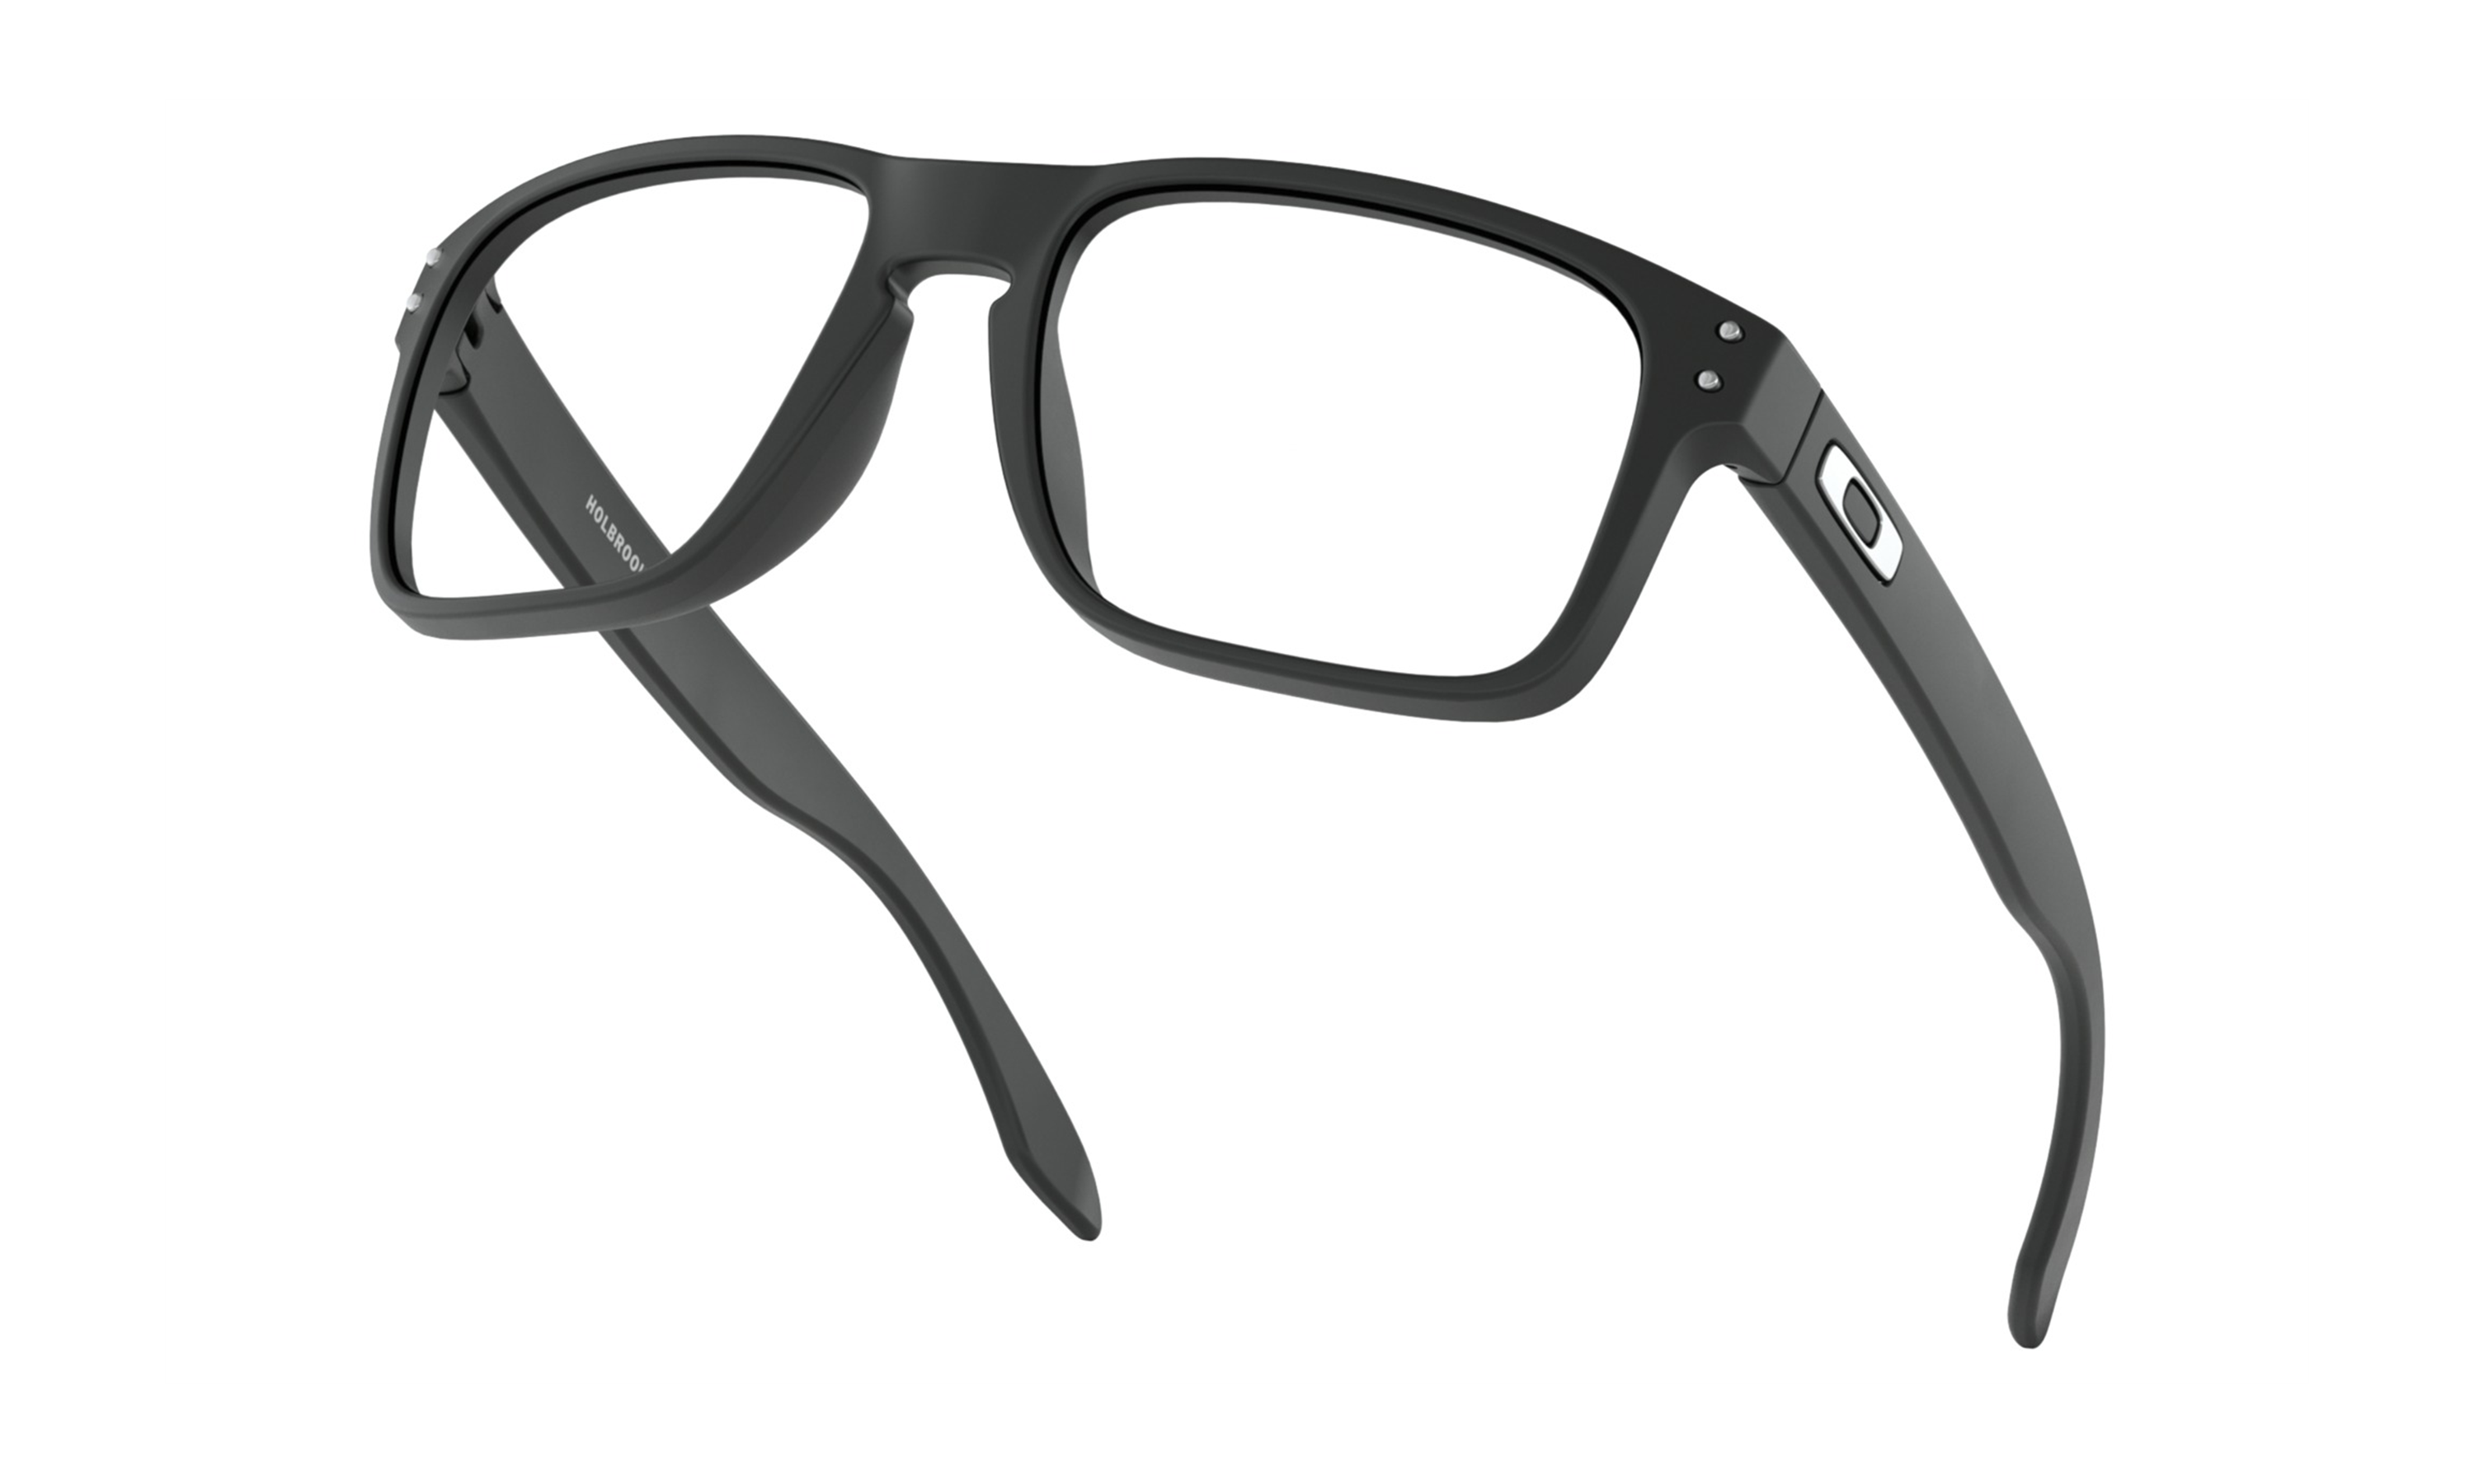 oakley reading glasses 1.25